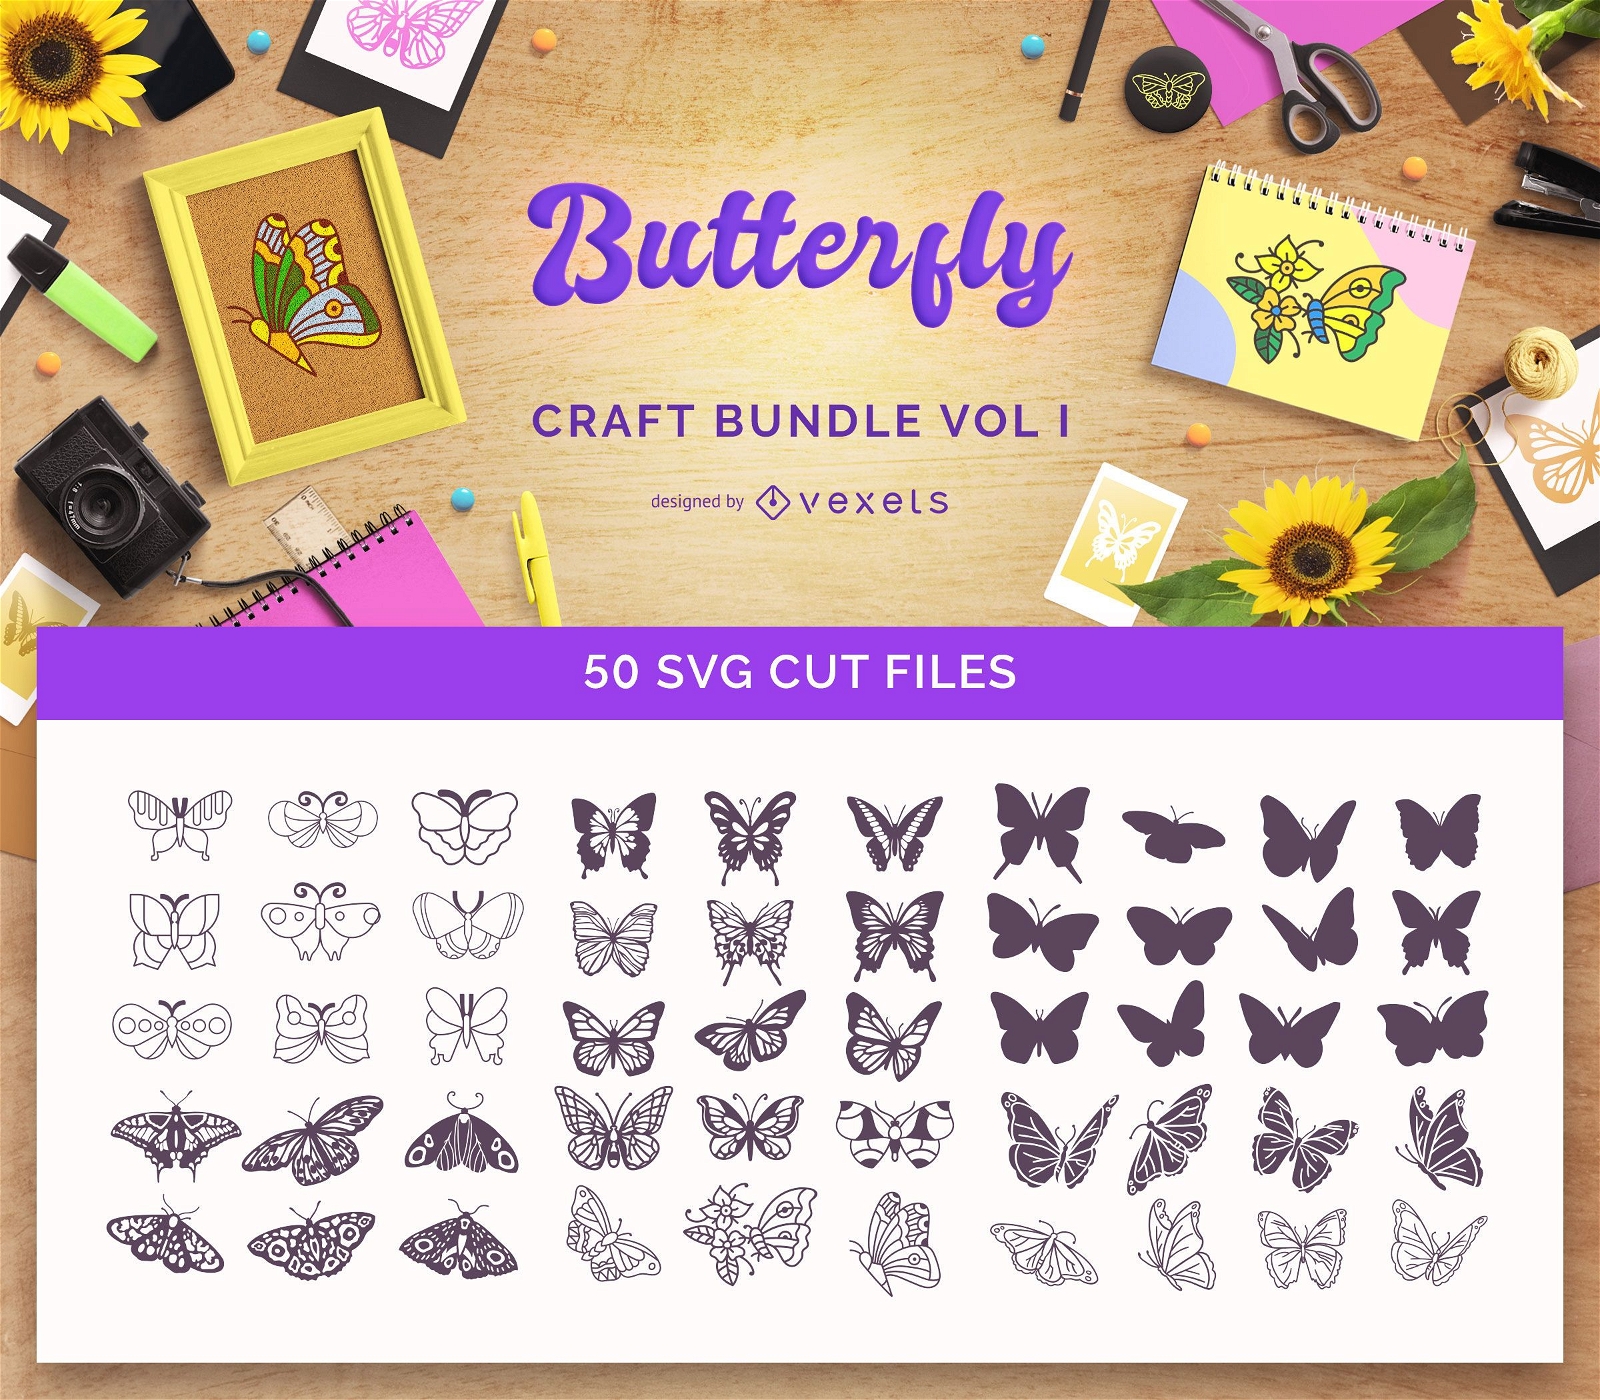 Pacote de artesanato de borboletas Vol I